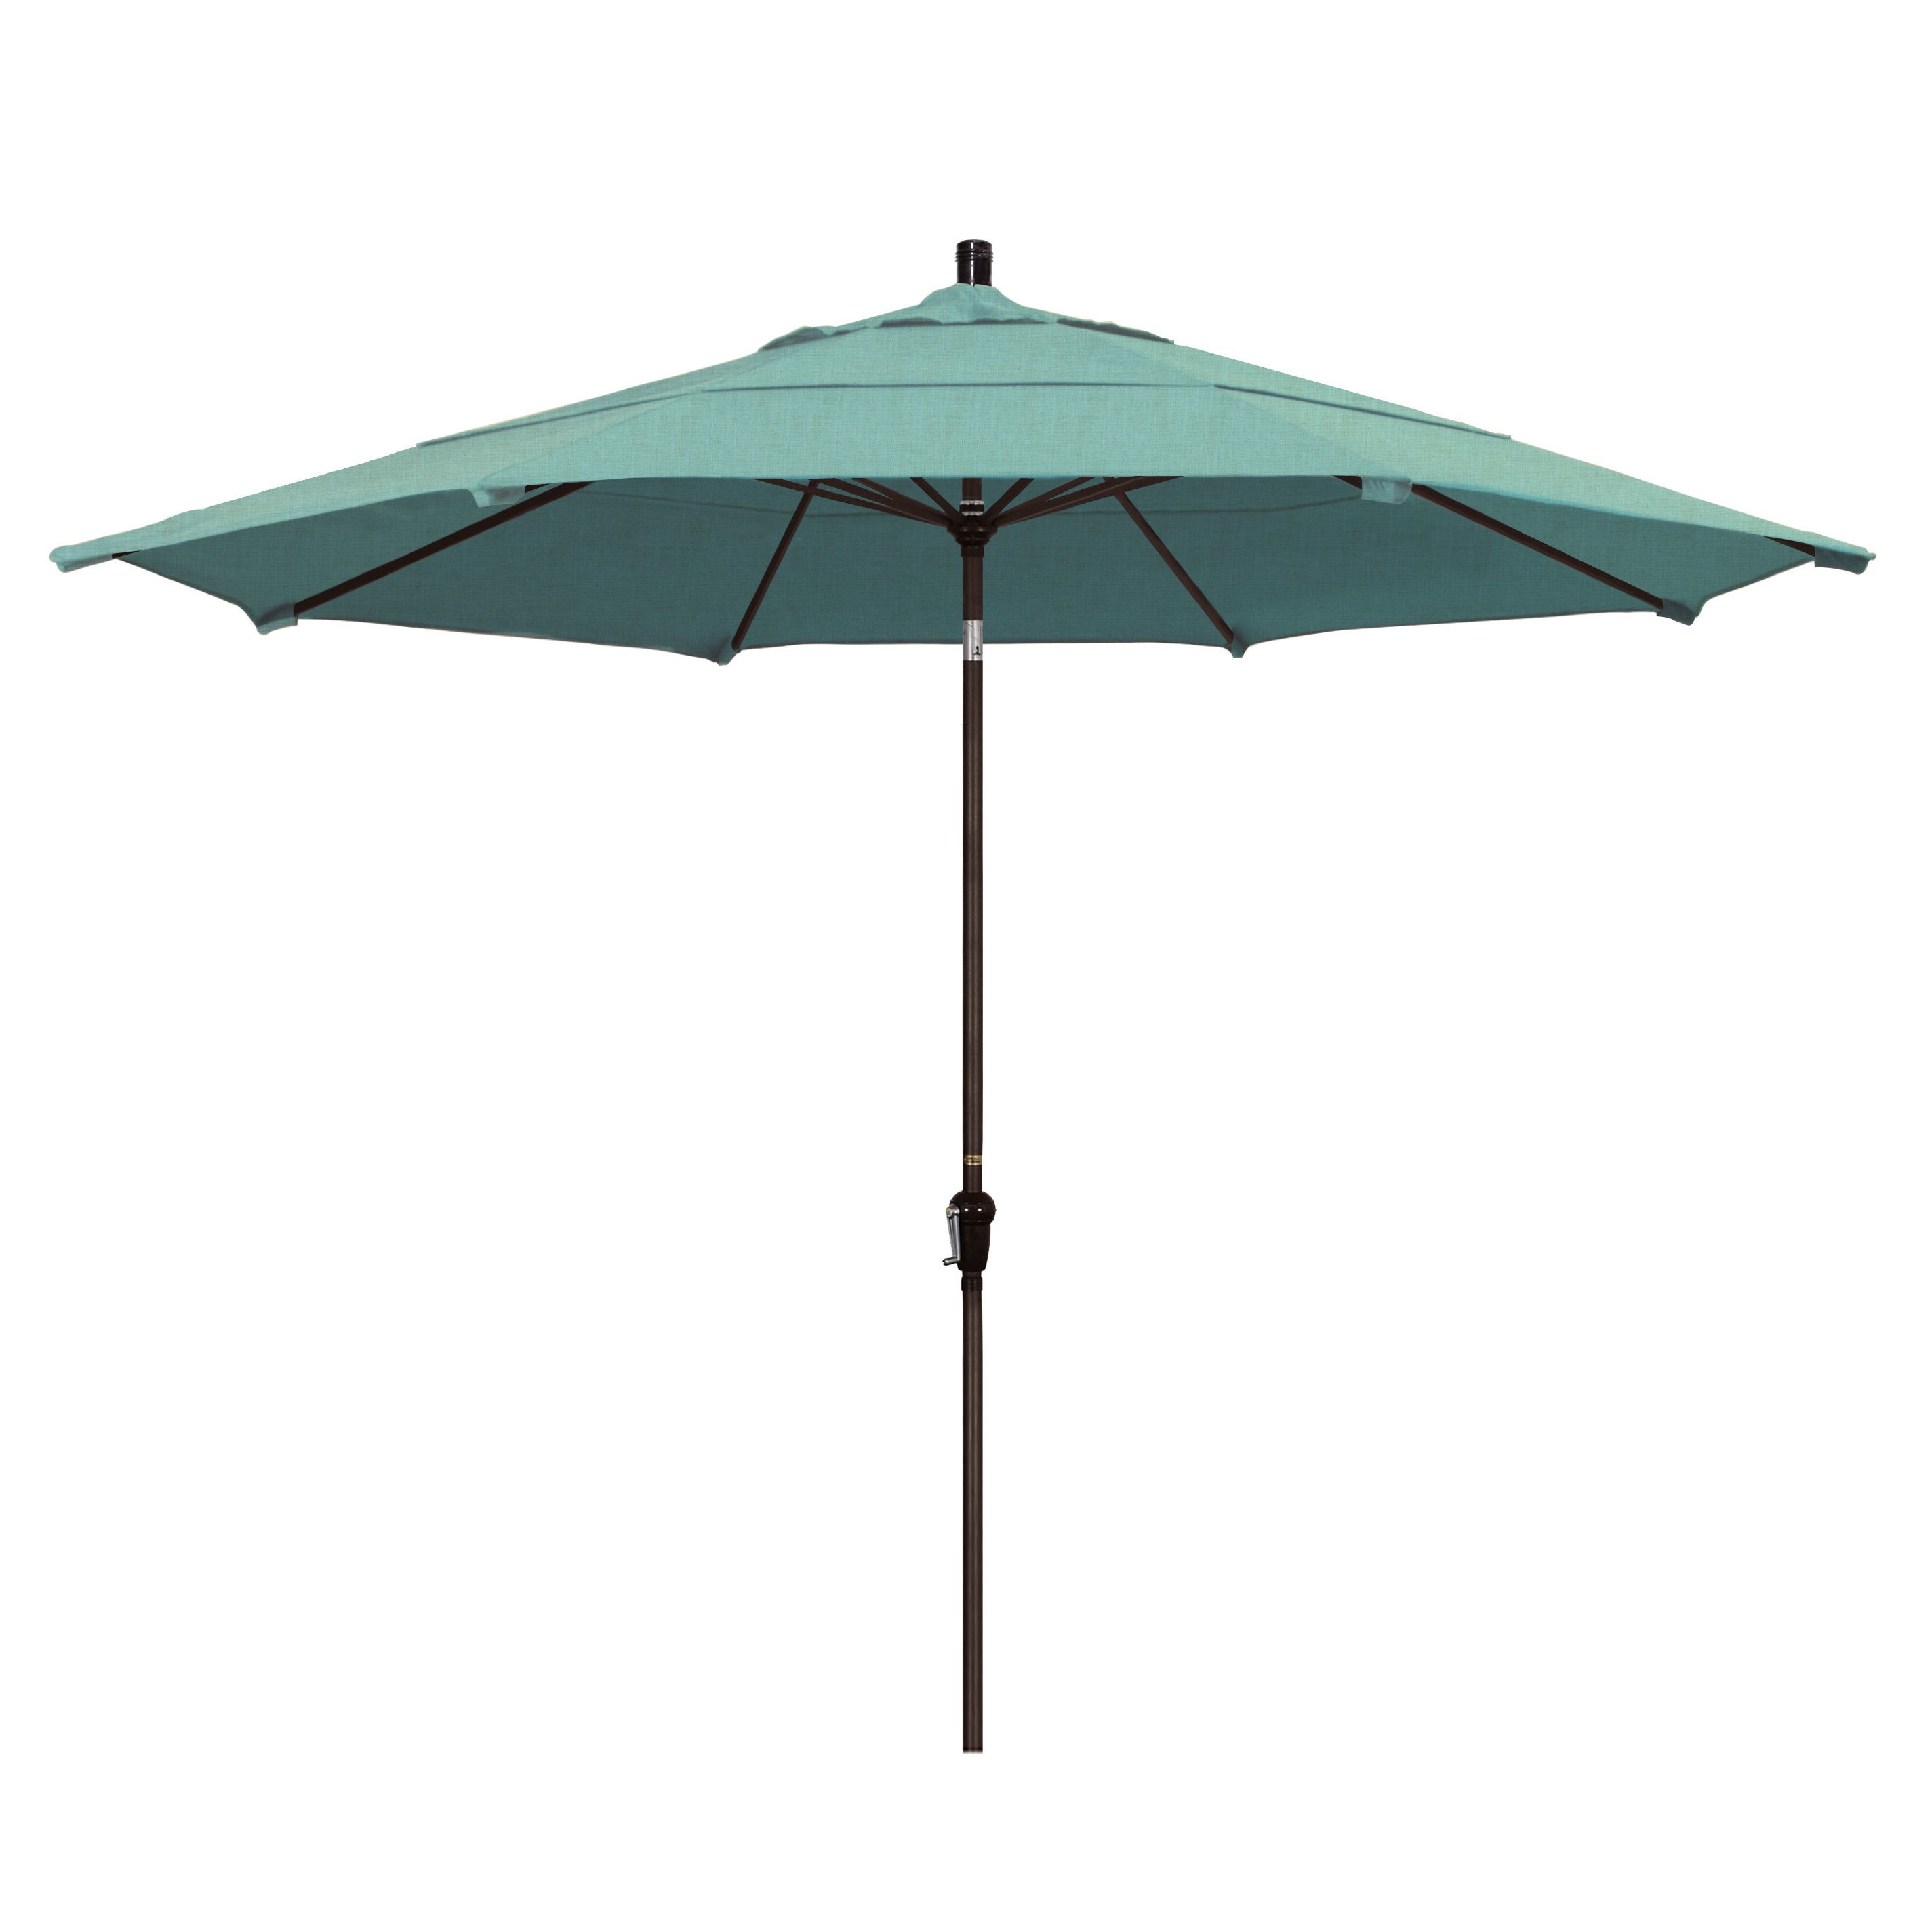 Alexander Elastic Rectangular Market Sunbrella Umbrellas Regarding Favorite Mullaney 11' Market Sunbrella Umbrella (View 13 of 20)